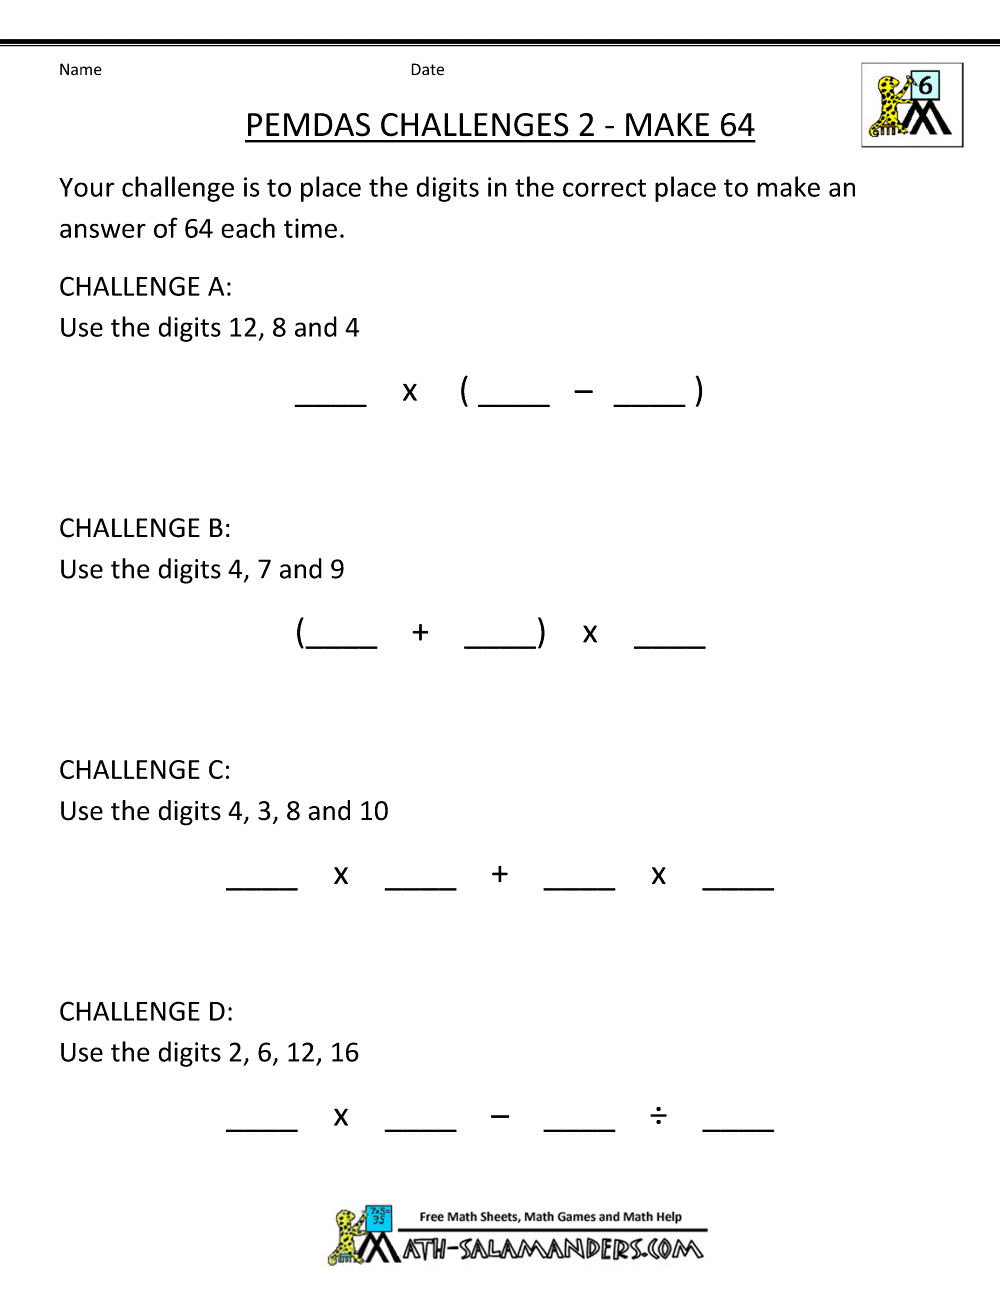 Sixth grade math homework sheets - larepairinnyc.web.fc2.com